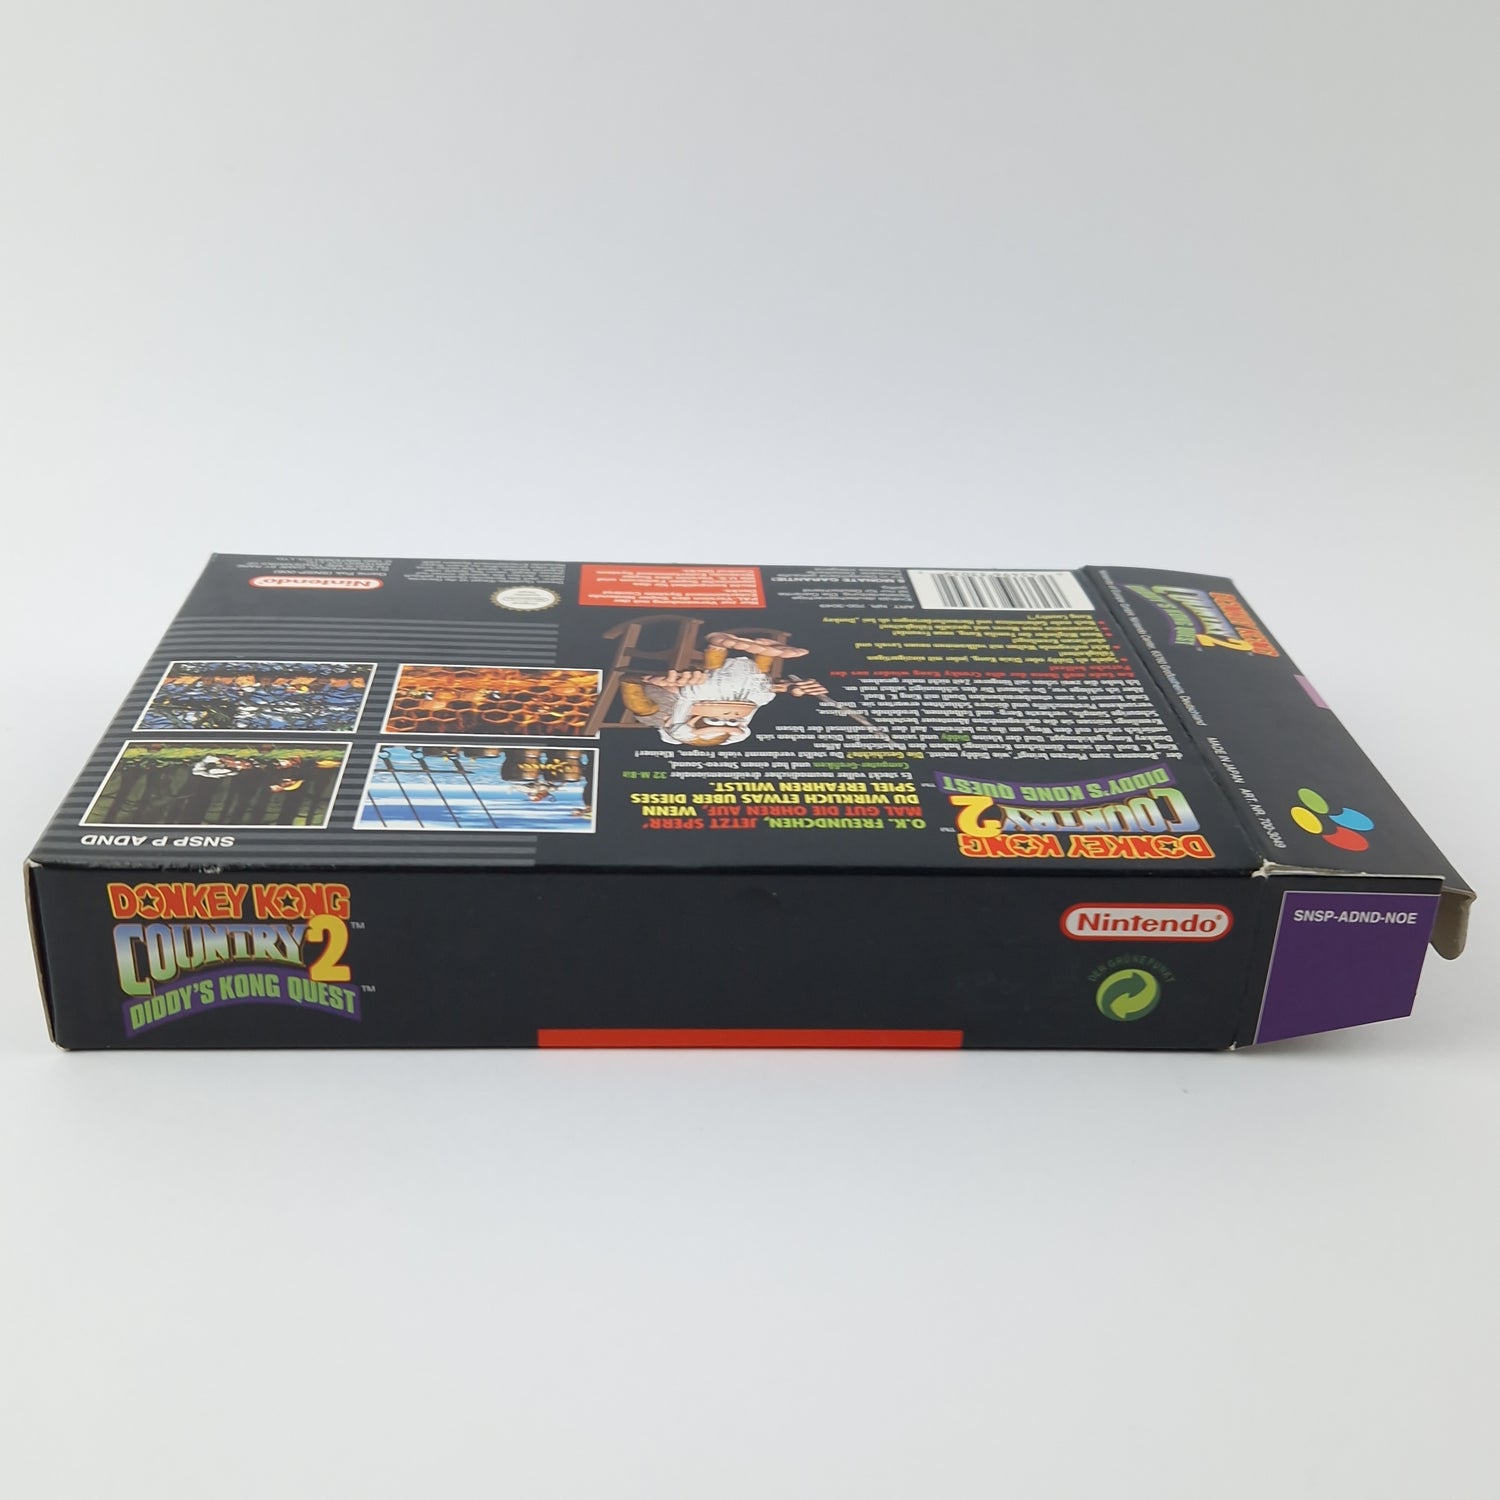 Super Nintendo Game: Donkey Kong Country 2 - Module Instructions OVP cib / SNES